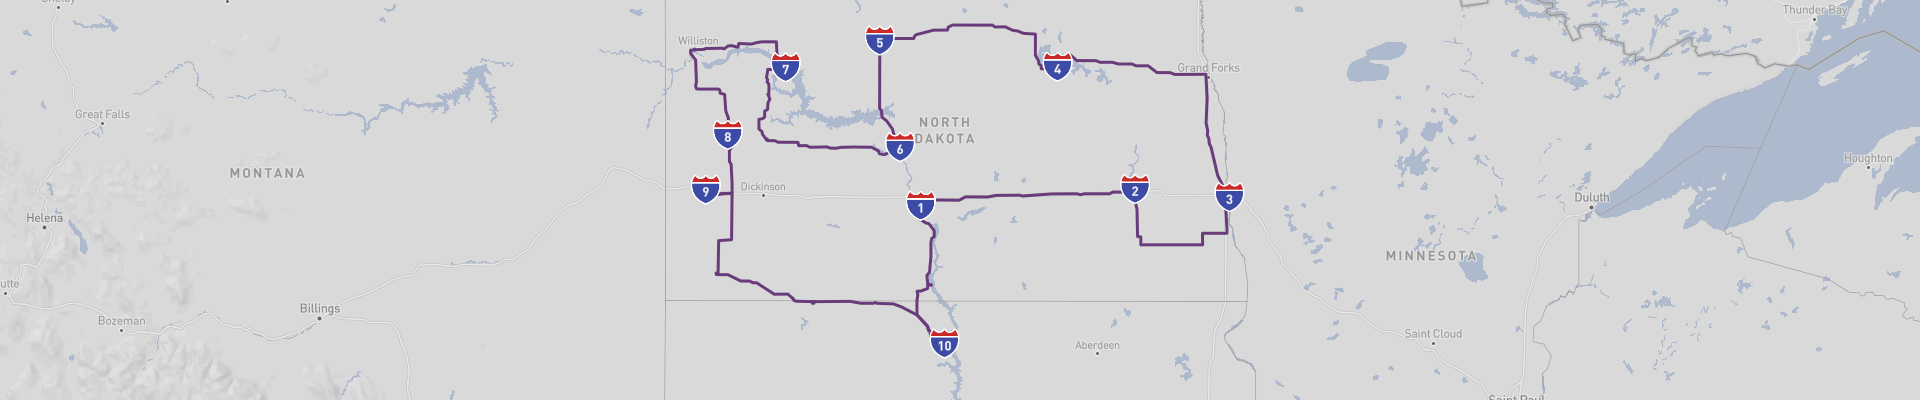 North Dakota Roadtrip